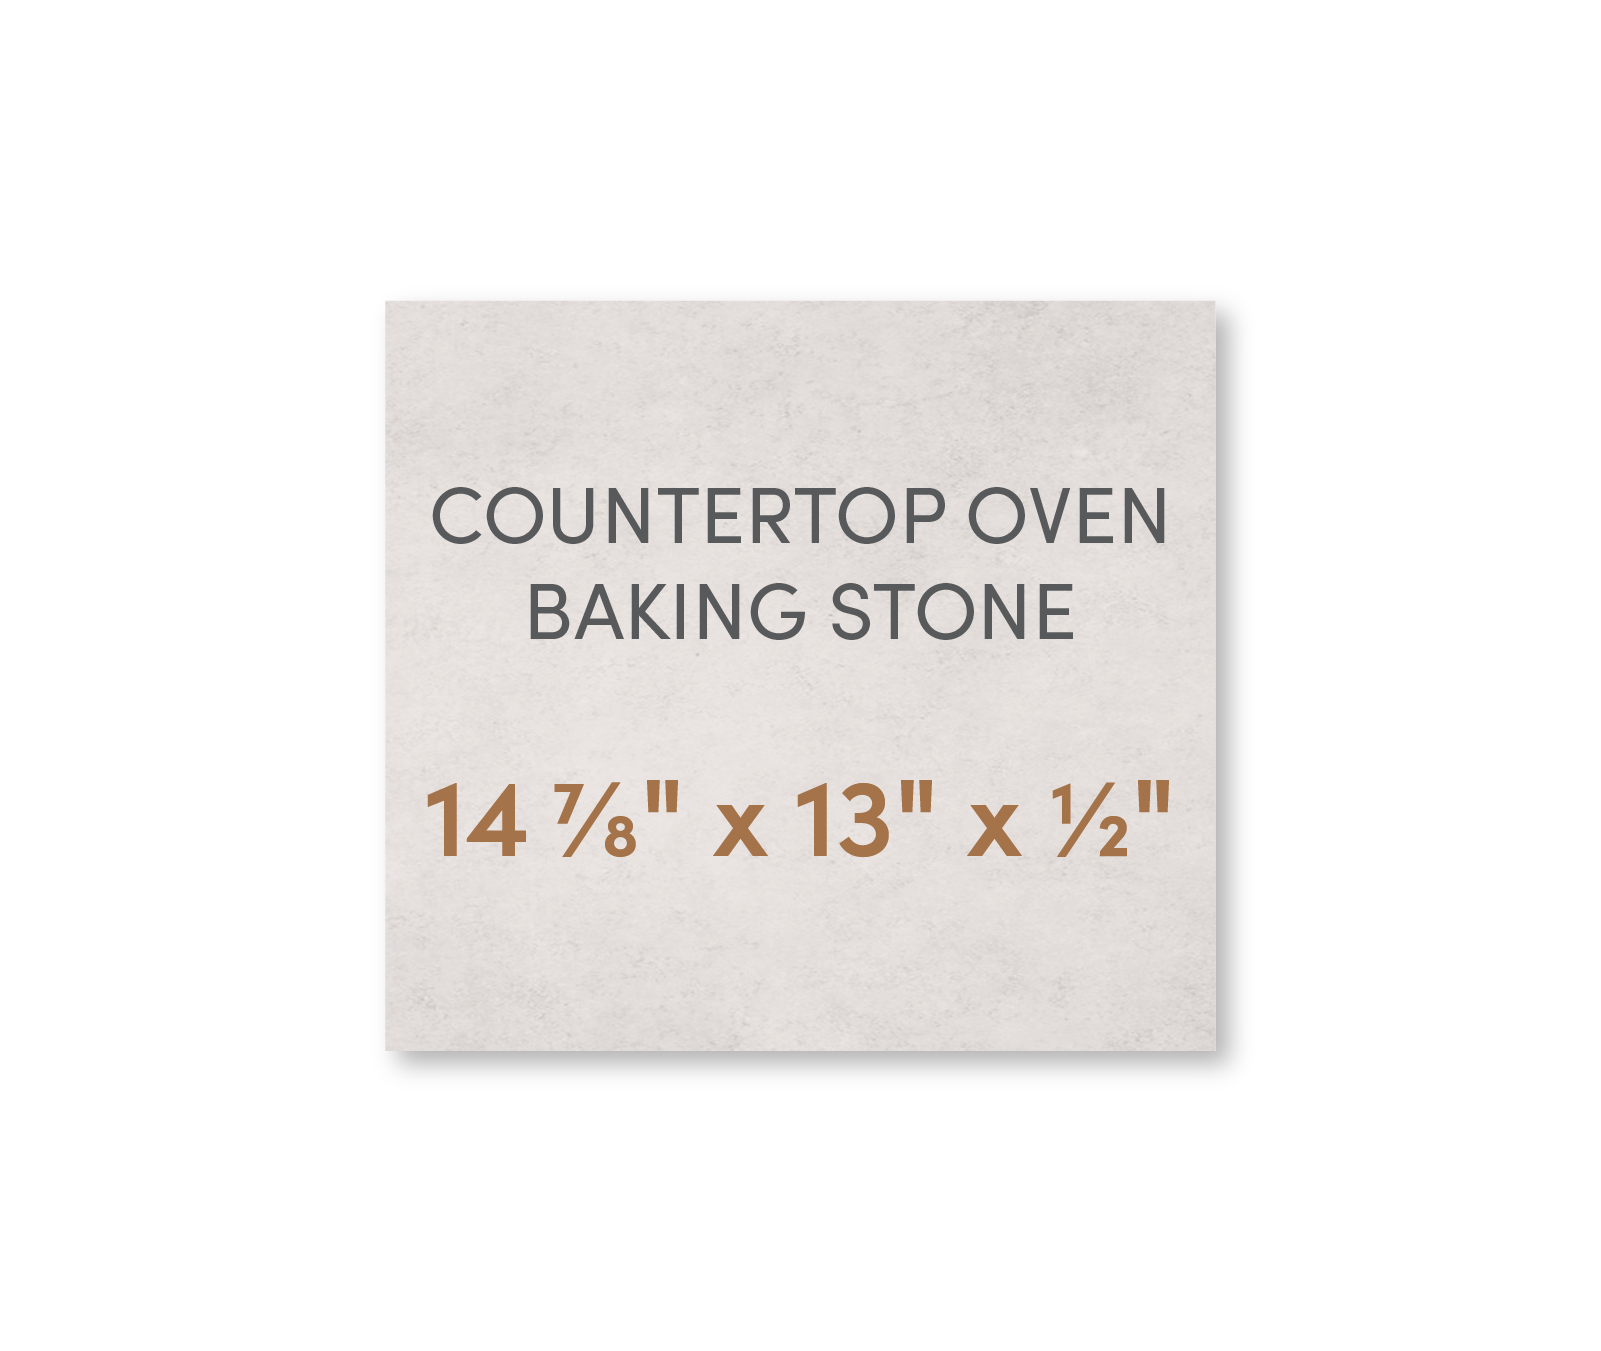 Countertop Oven Baking Stone 14 7/8" x 13" x 1/2"